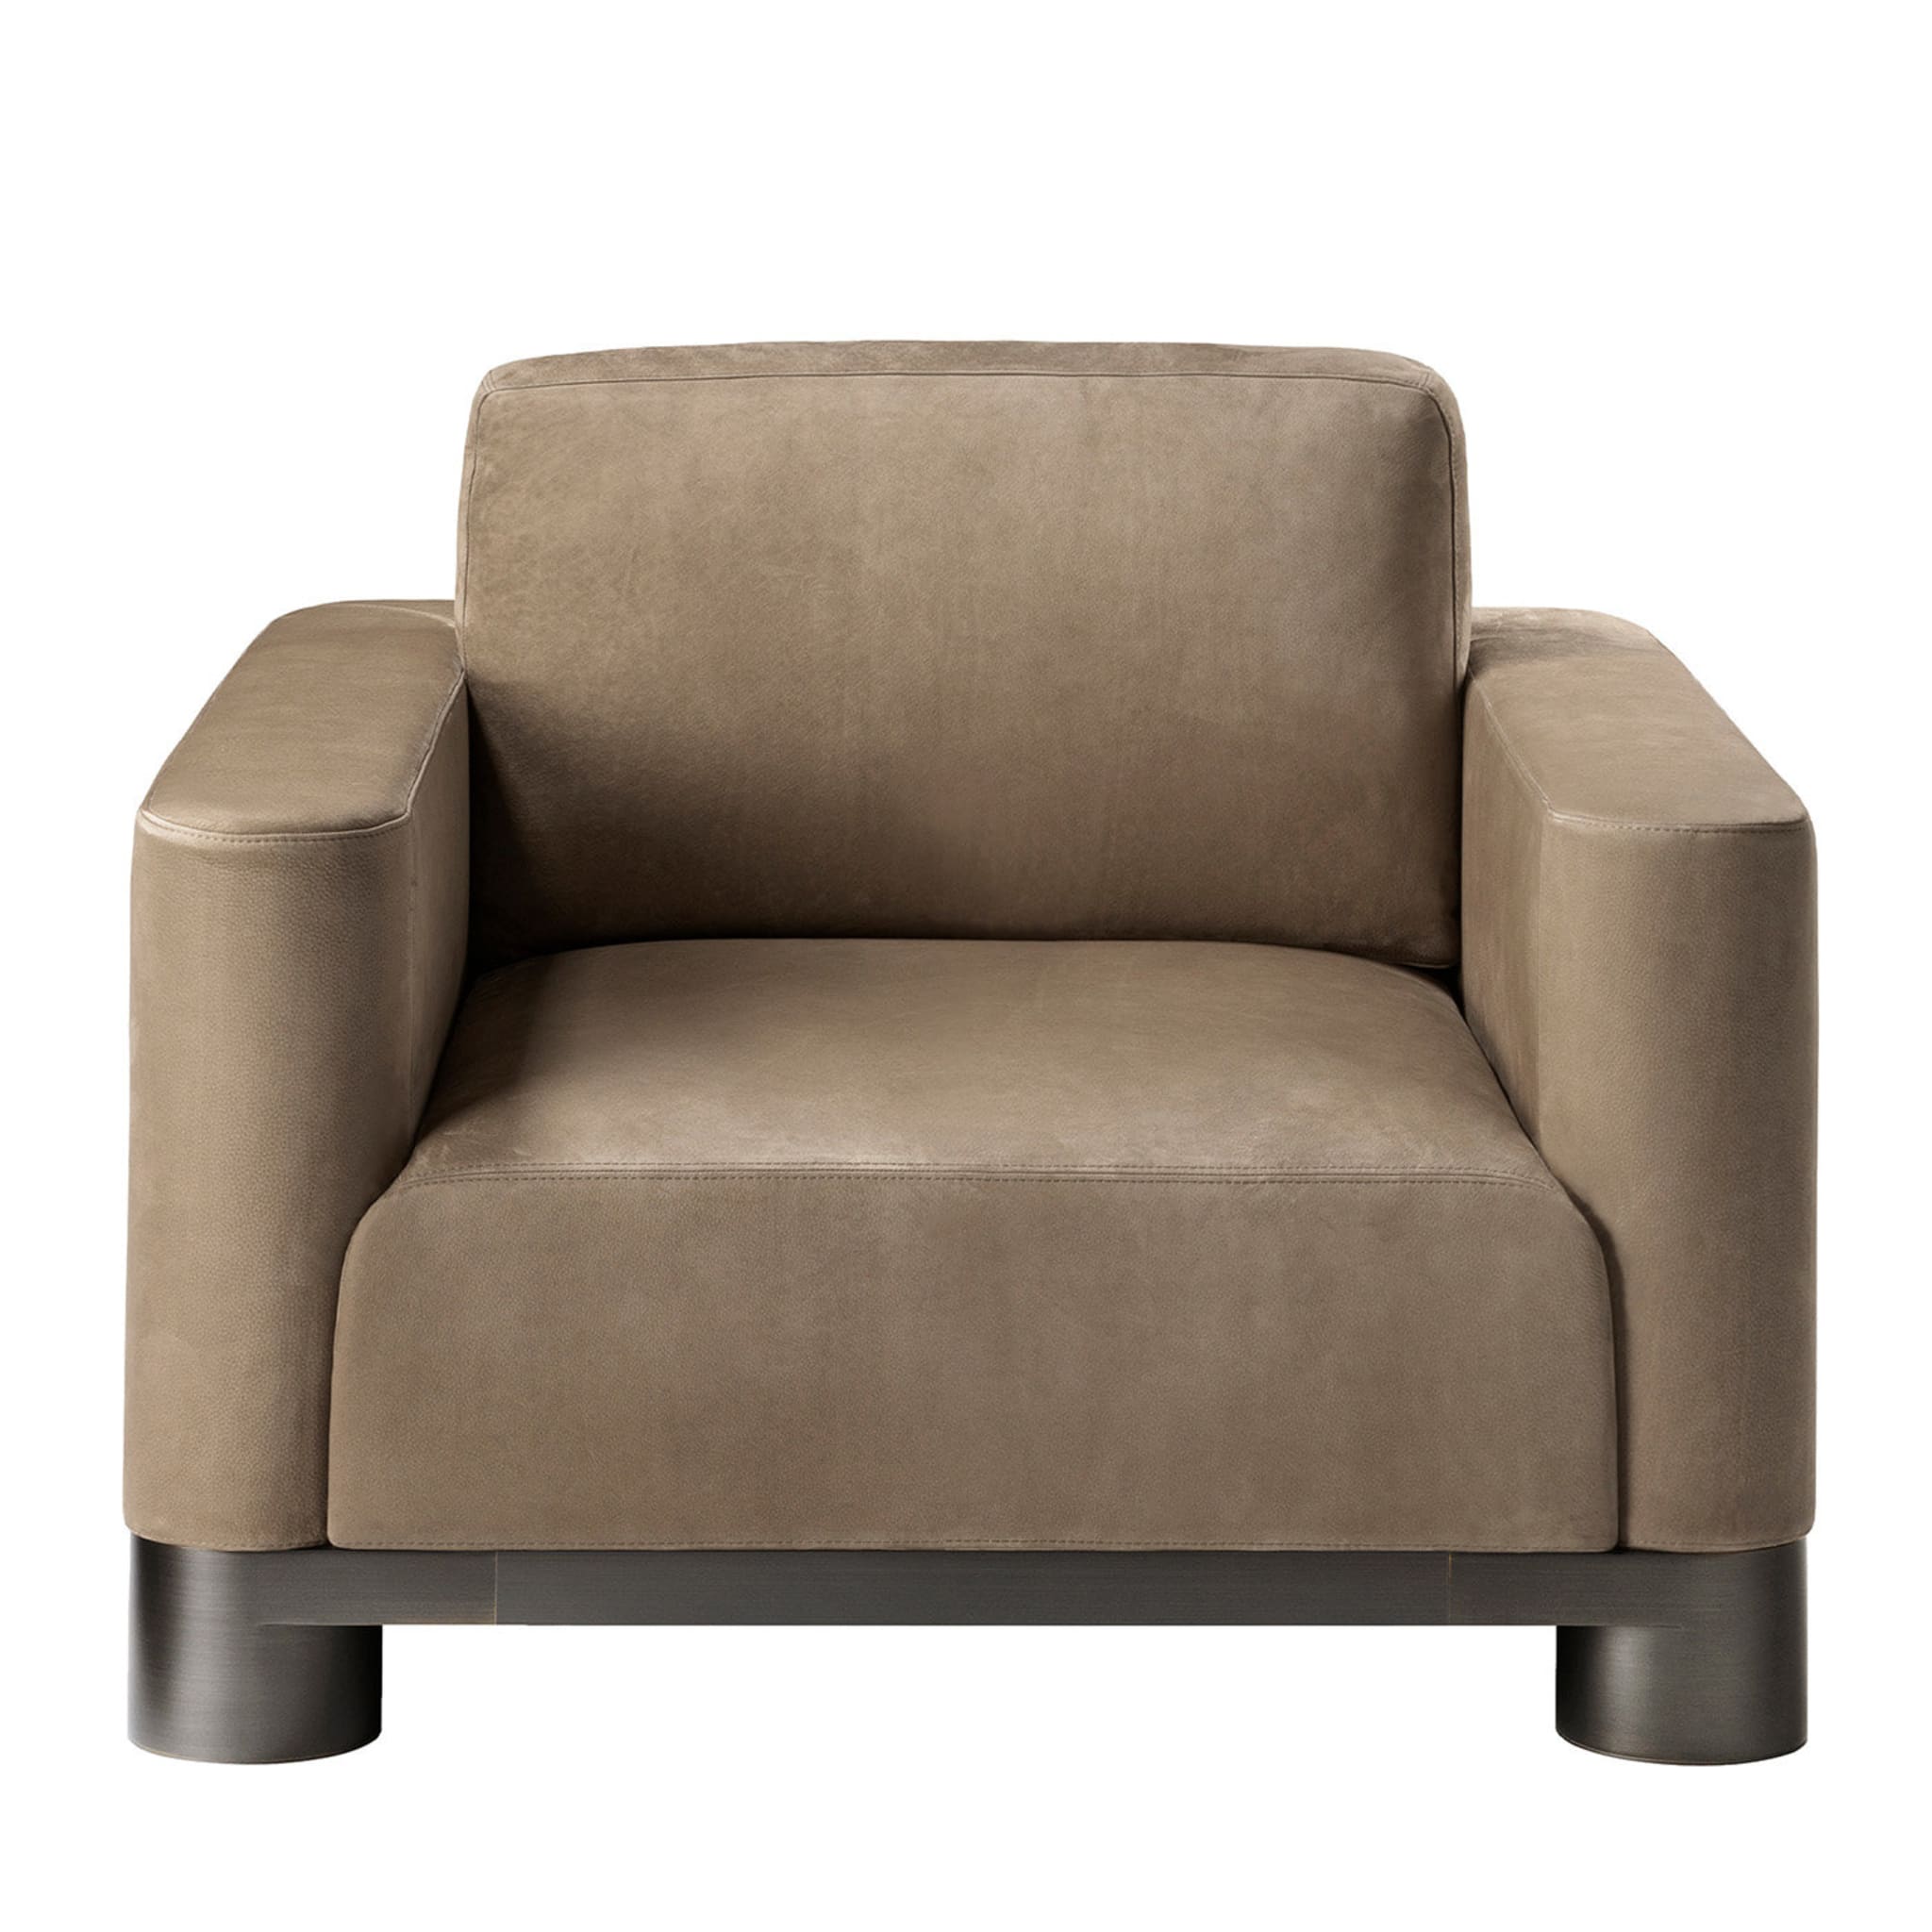 Bold Beige Lounge Chair - Main view